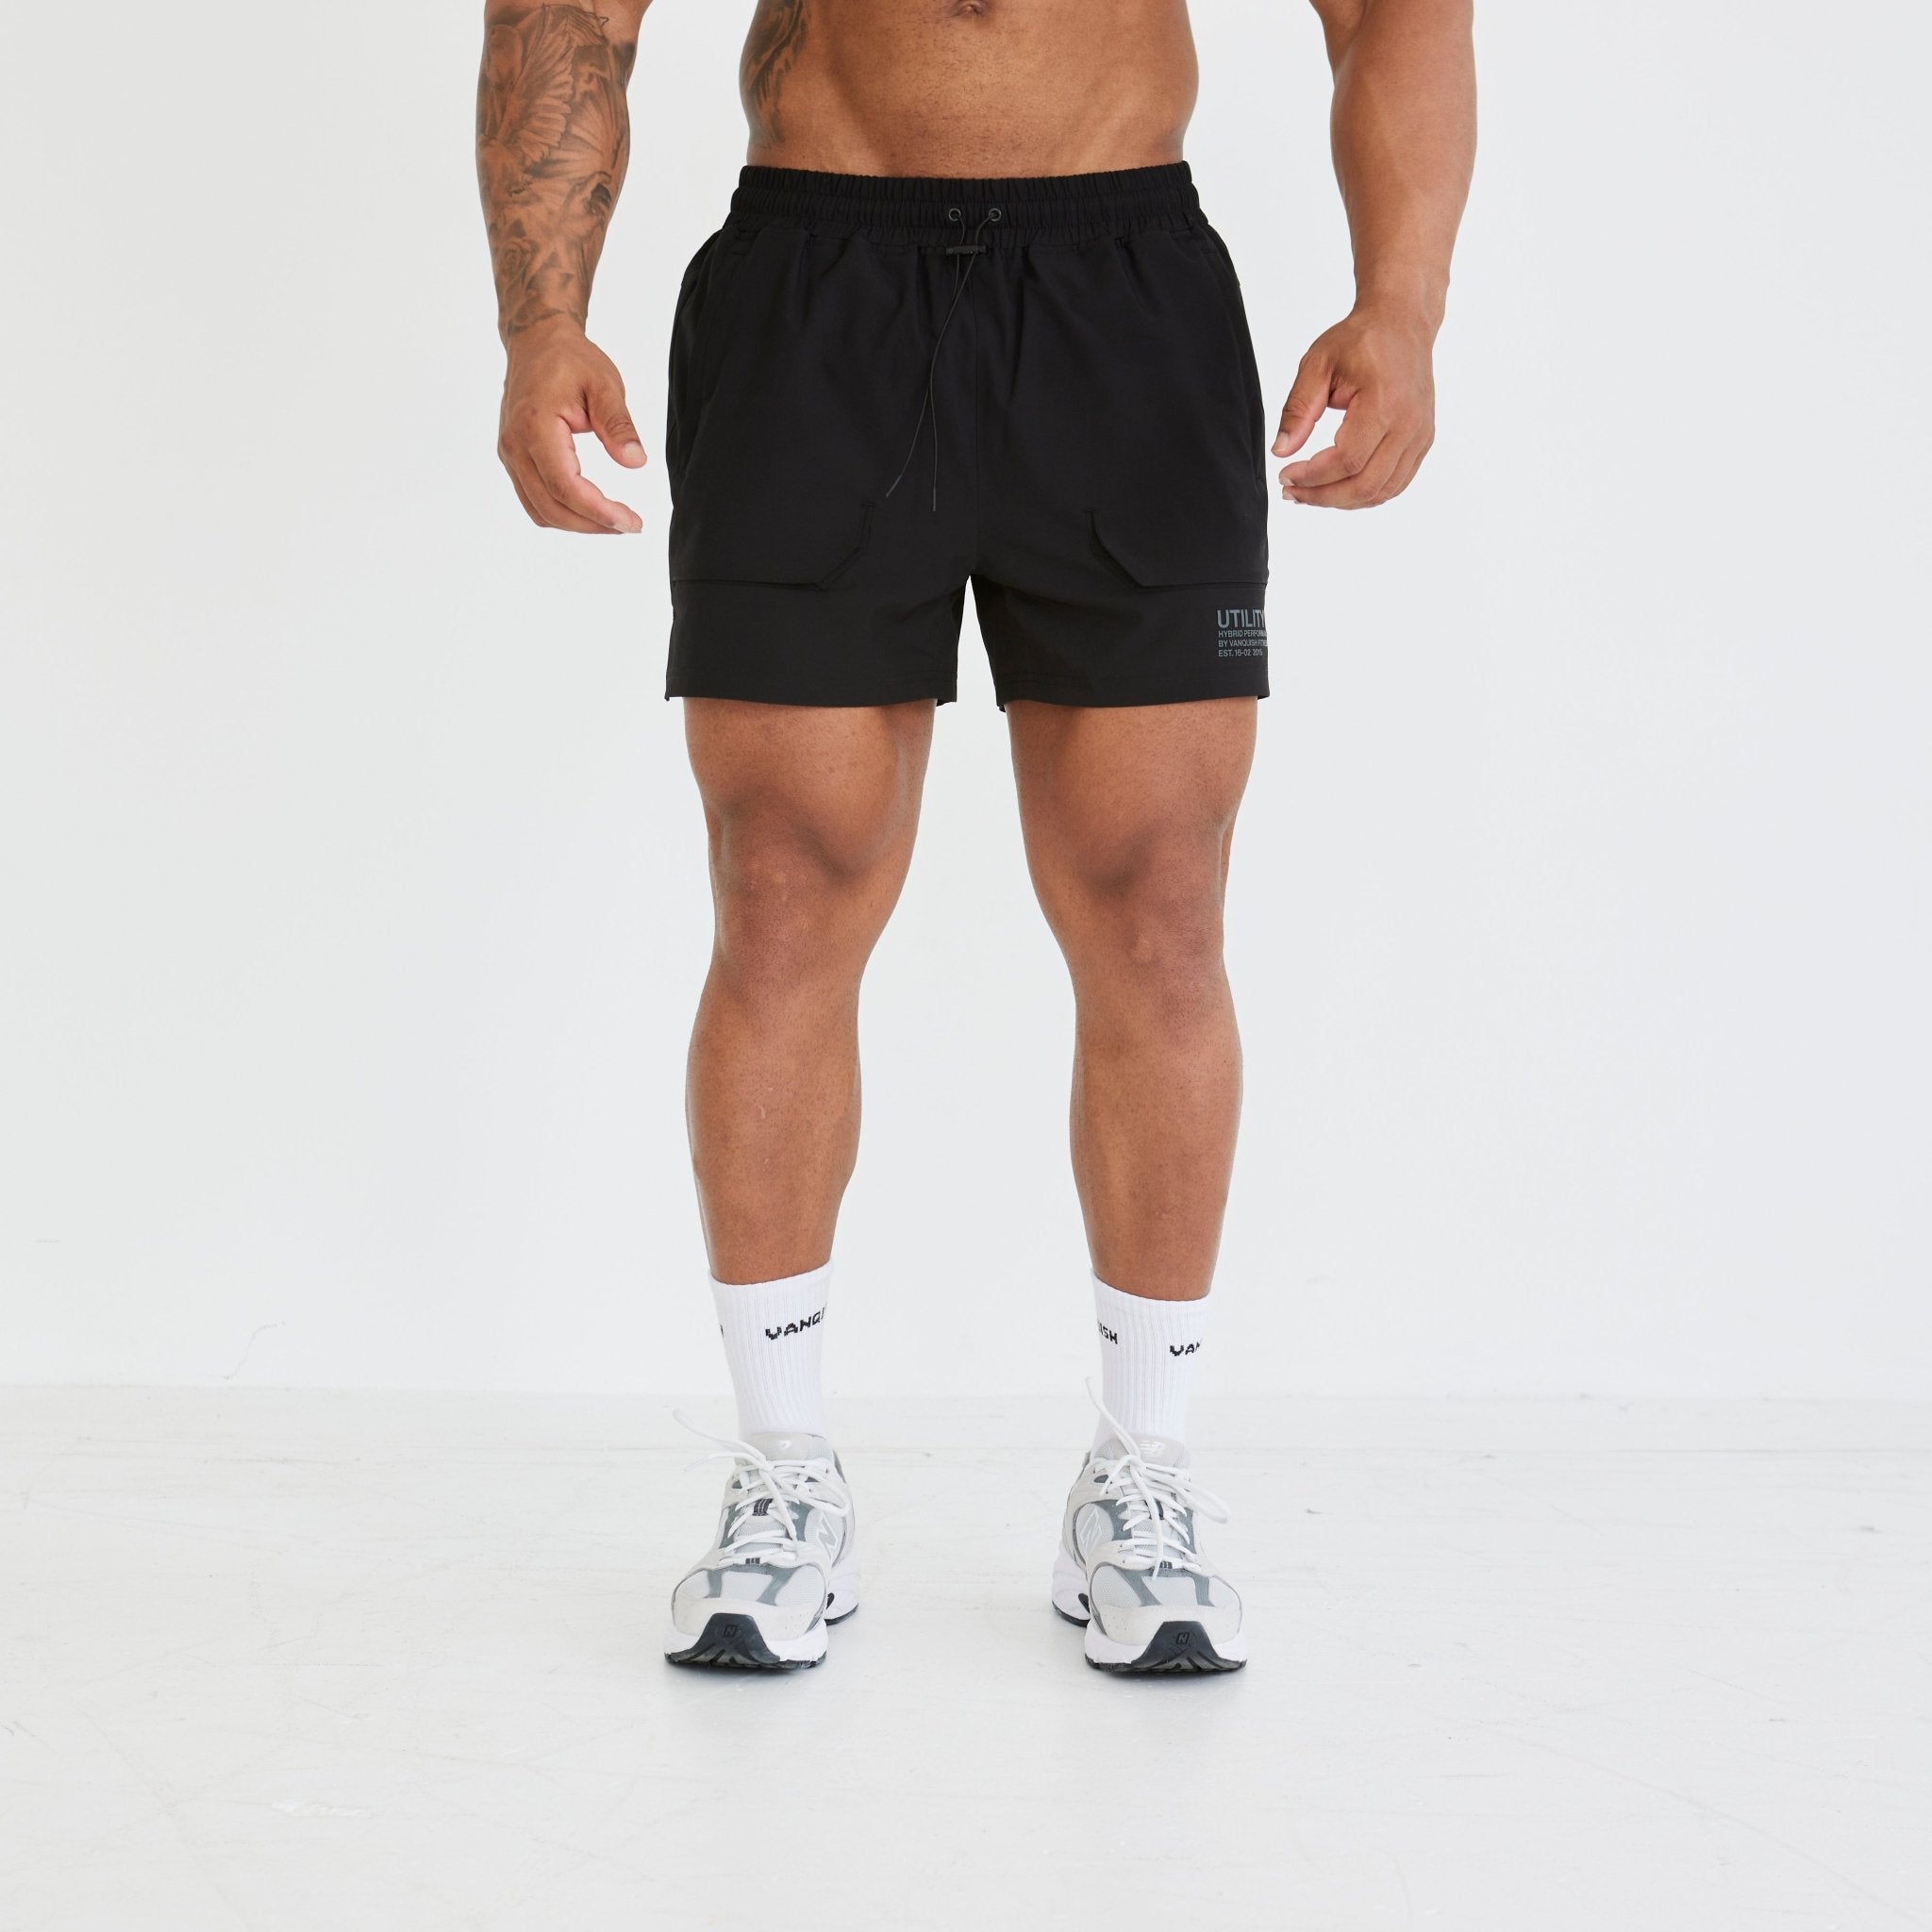 Vanquish Utility V3 Black 4" Shorts - Vanquish Fitness